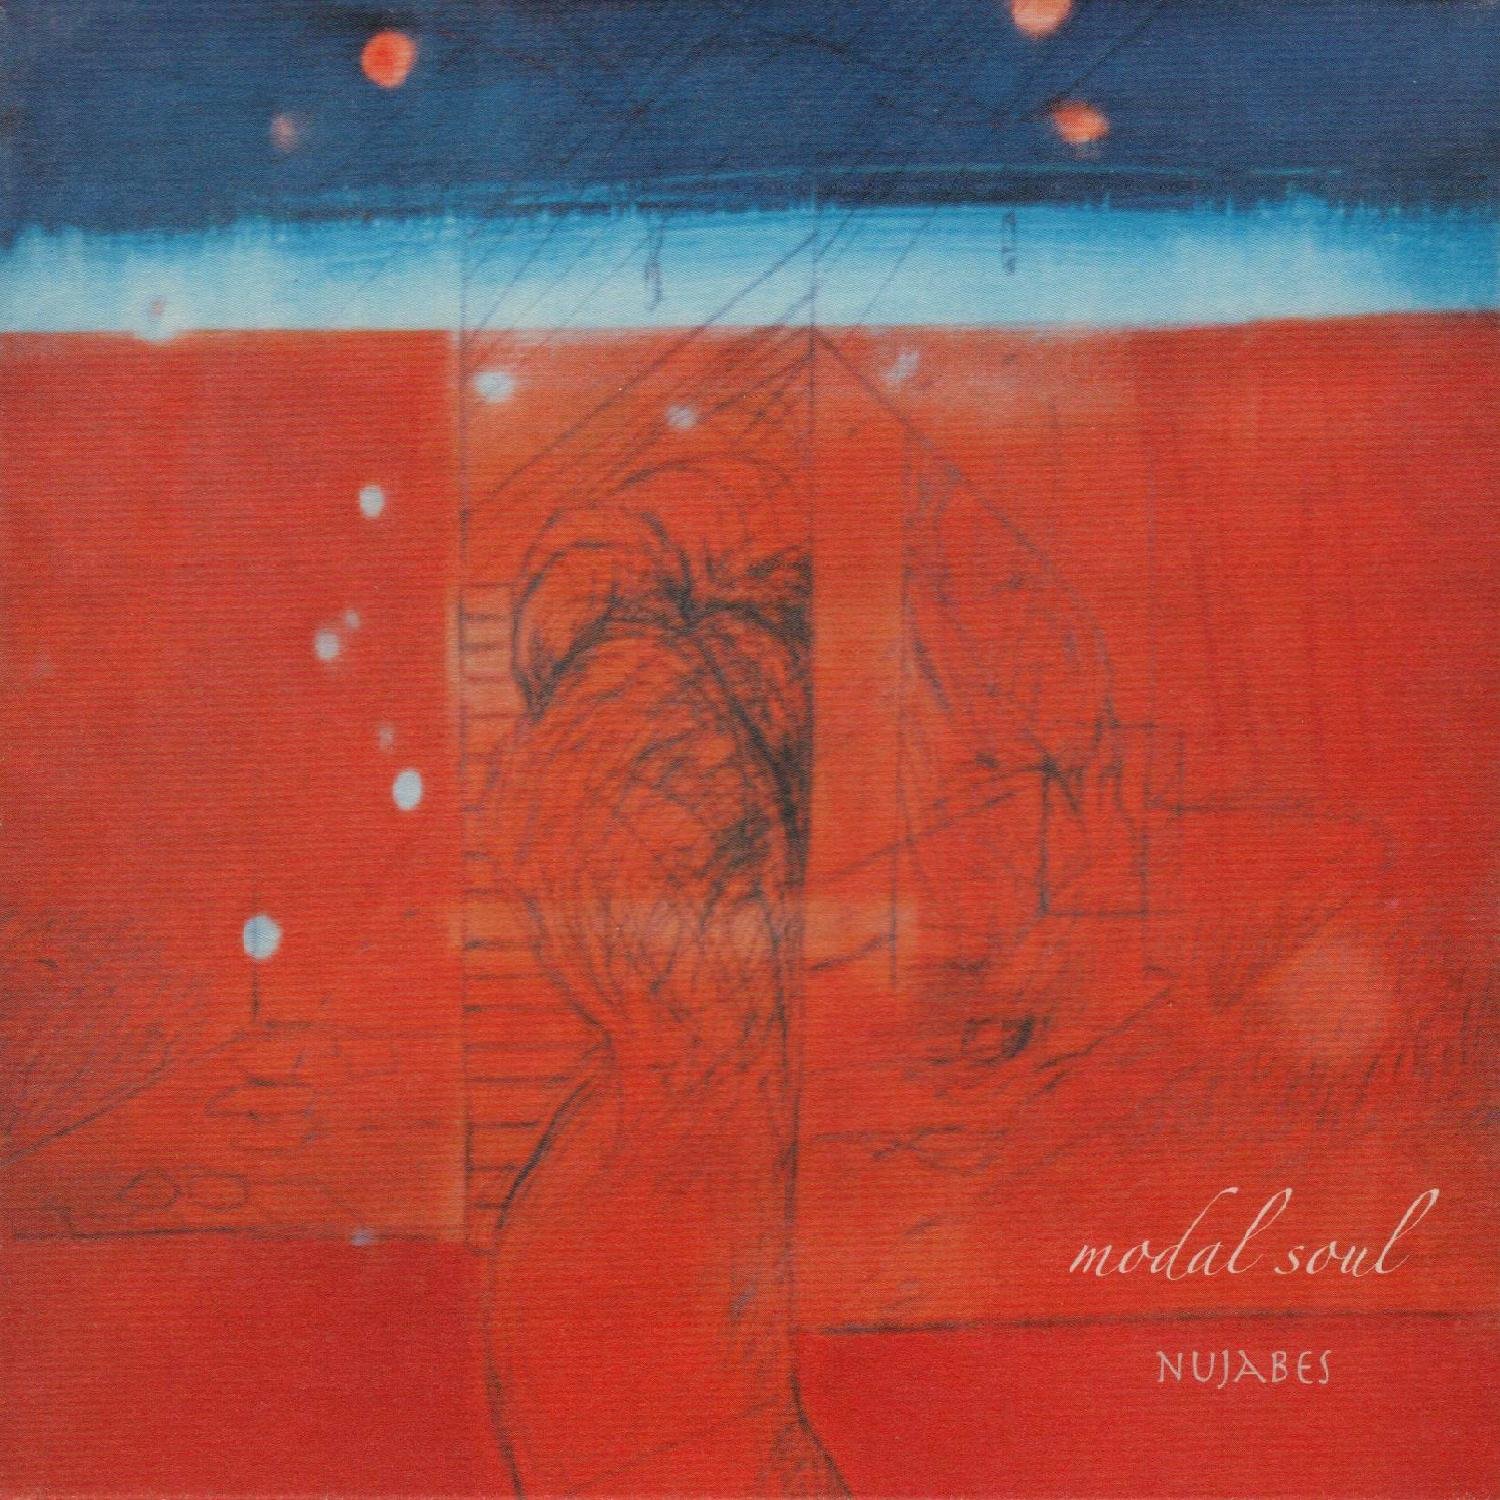 Nujabes10周忌追悼イベントにて先行販売される名盤『Modal Soul』2枚組 